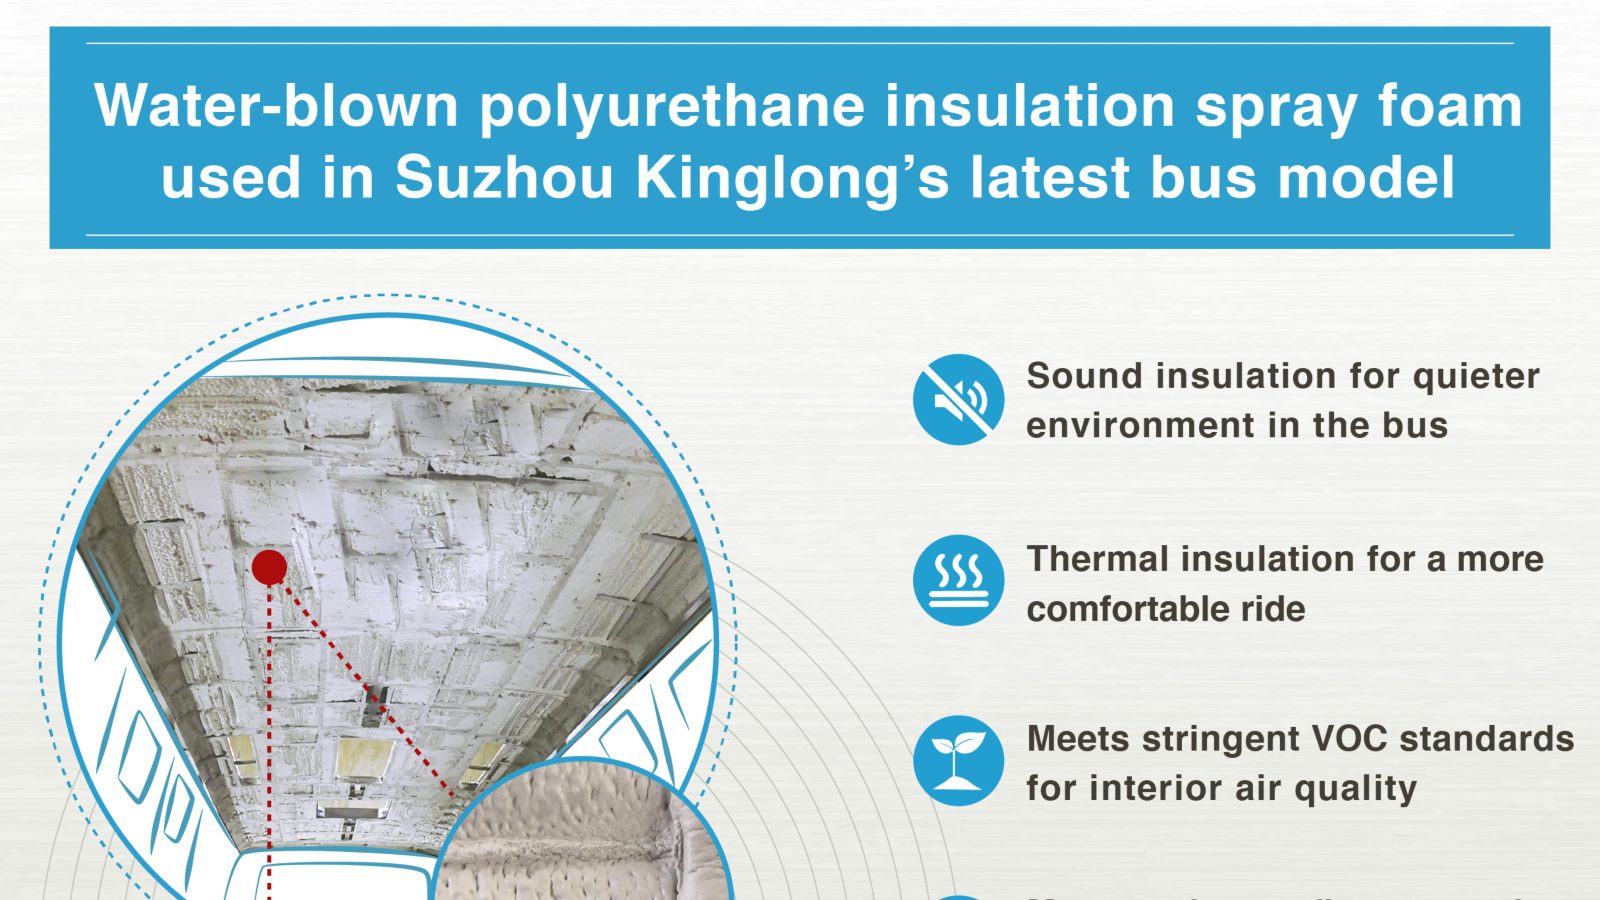 BASF's water-blown polyurethane insulation spray foam helps improve  interior air quality of Suzhou Kinglong's latest bus model